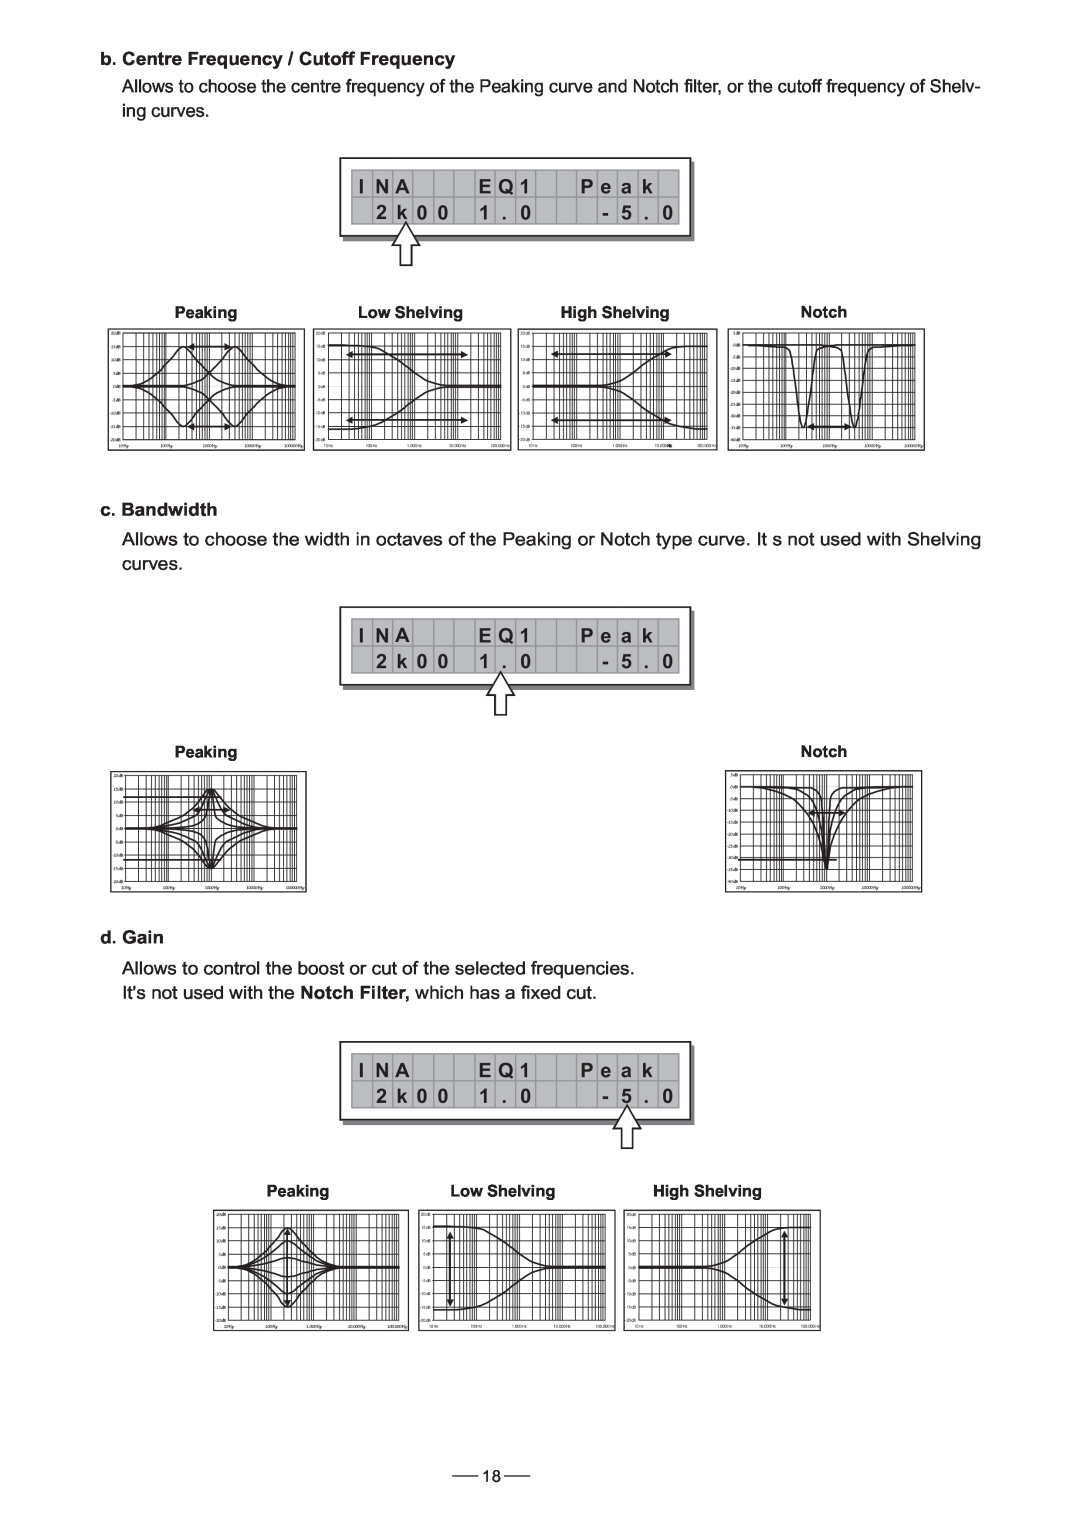 Nilfisk-ALTO 3.4 user manual b. Centre Frequency / Cutoff Frequency, c.Bandwidth, d.Gain 